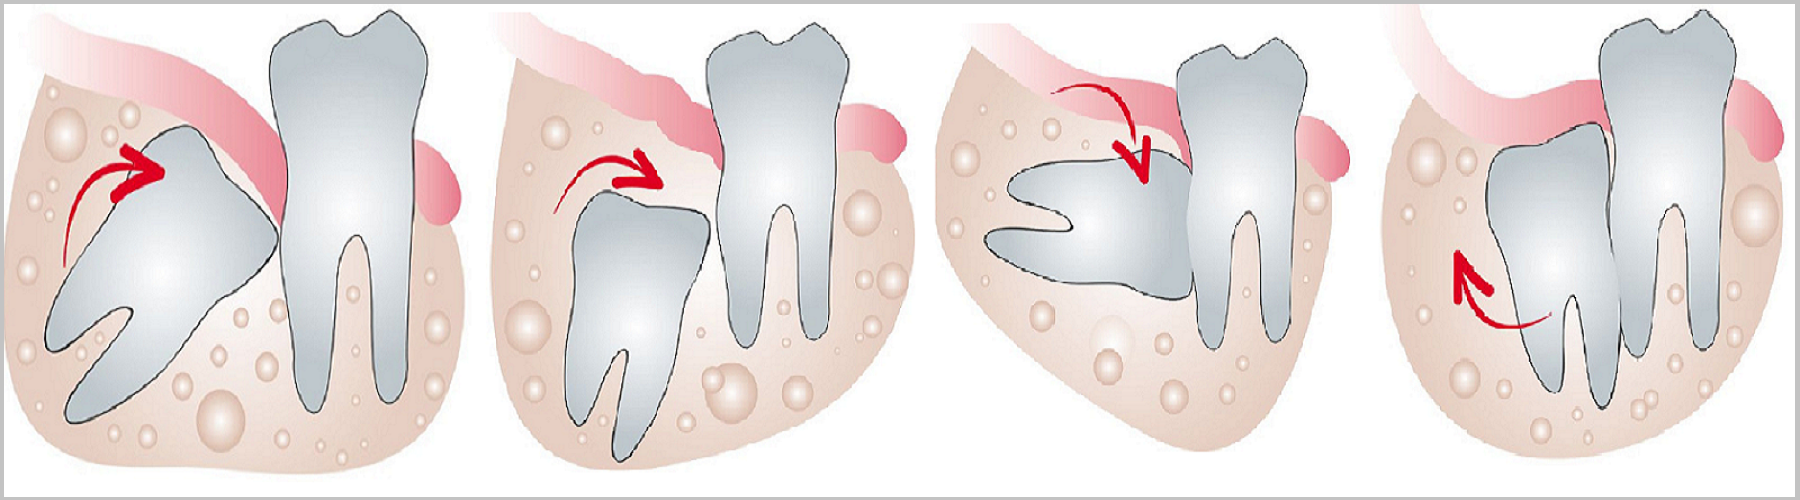 Oral Surgery Wisdom Teeth 91